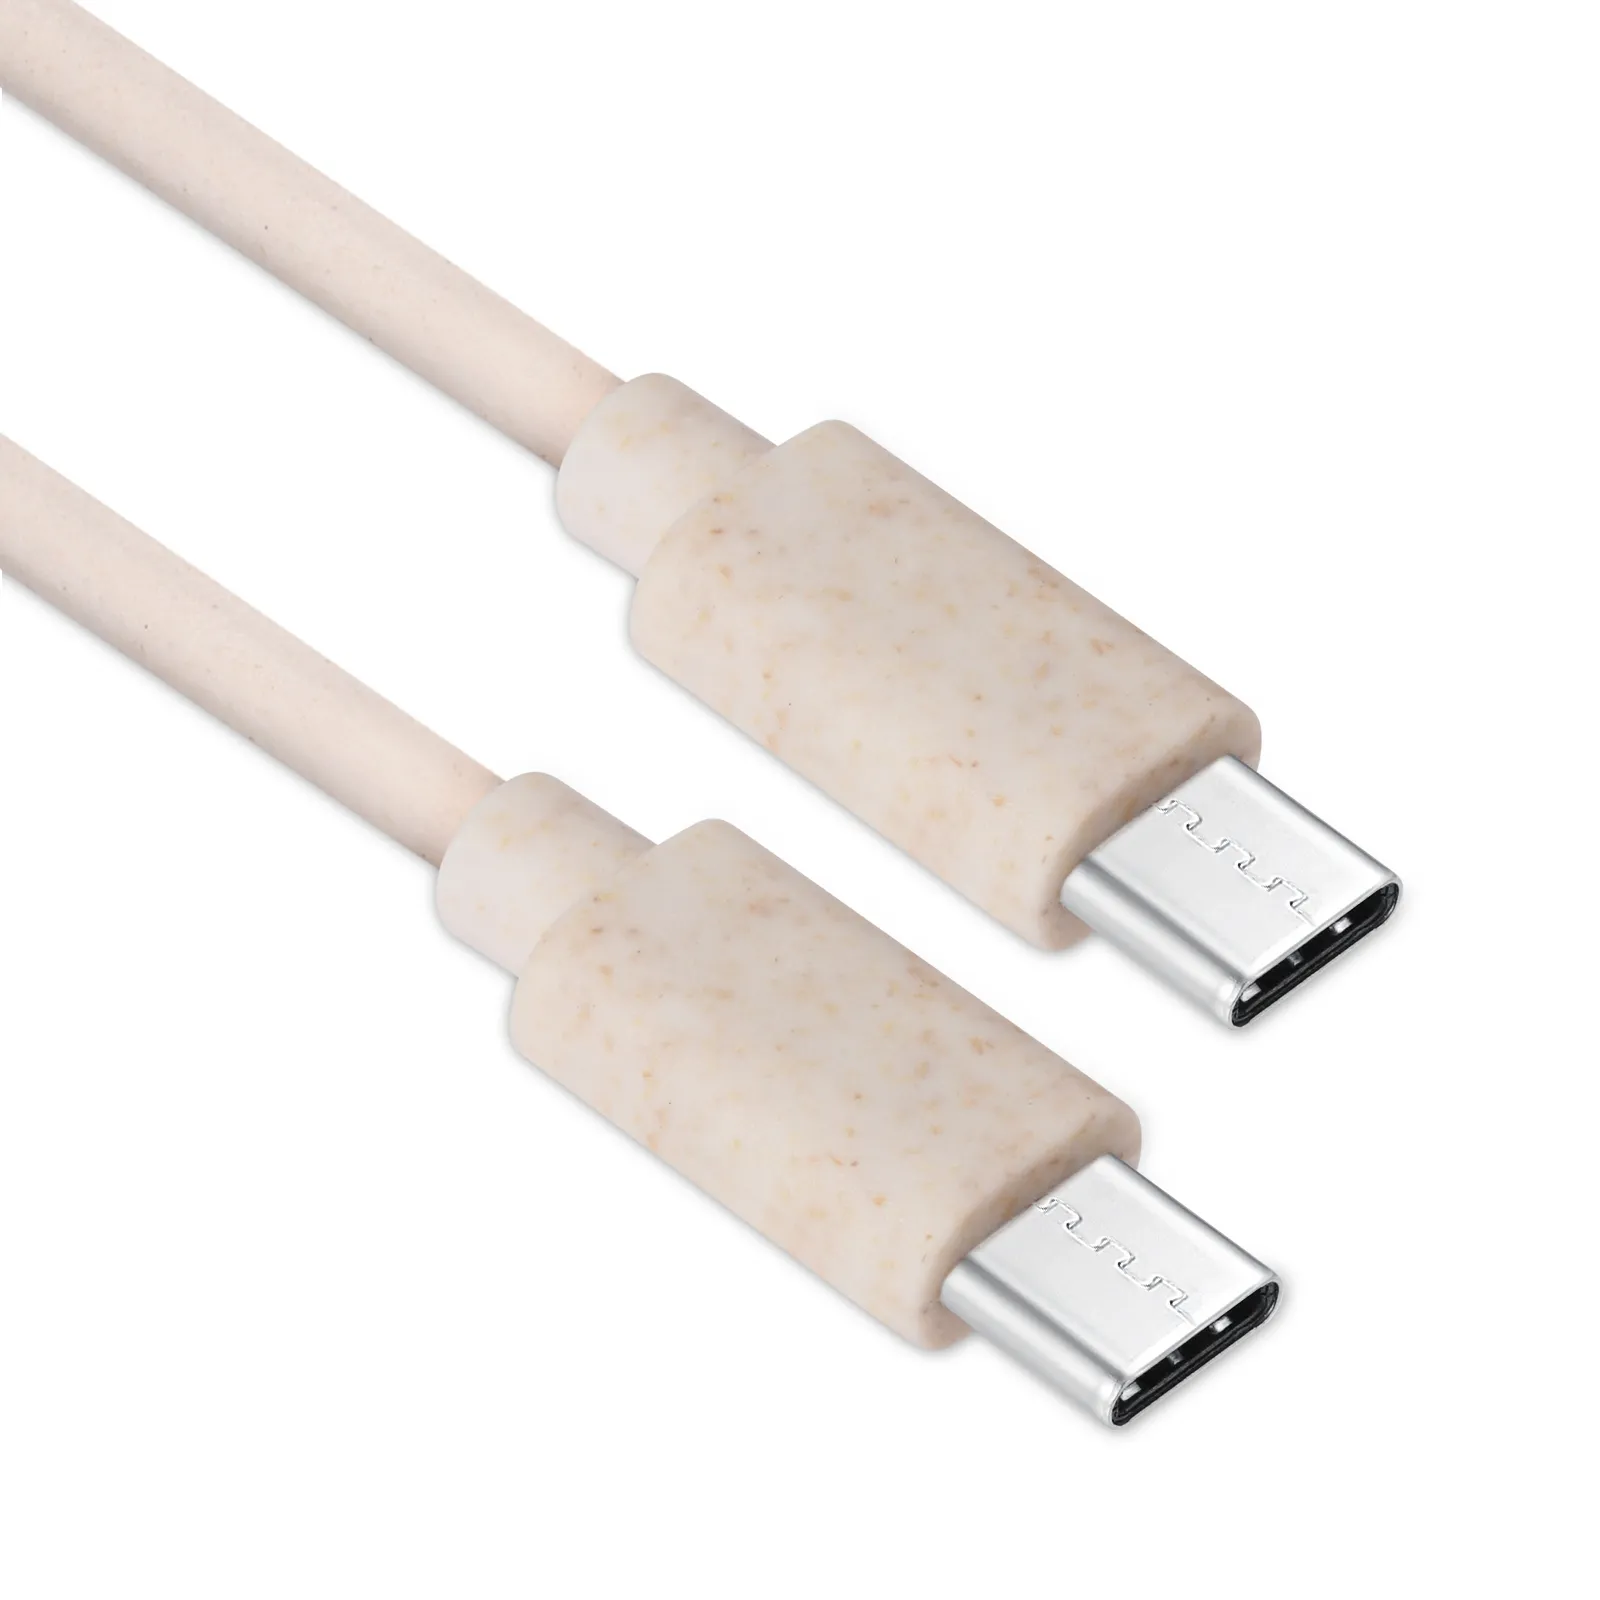 Kabel Pengisi Daya Cepat, Ramah Lingkungan Tipe C Ke C USB 2.0 2.4A Bio-Terdegradasi USB C